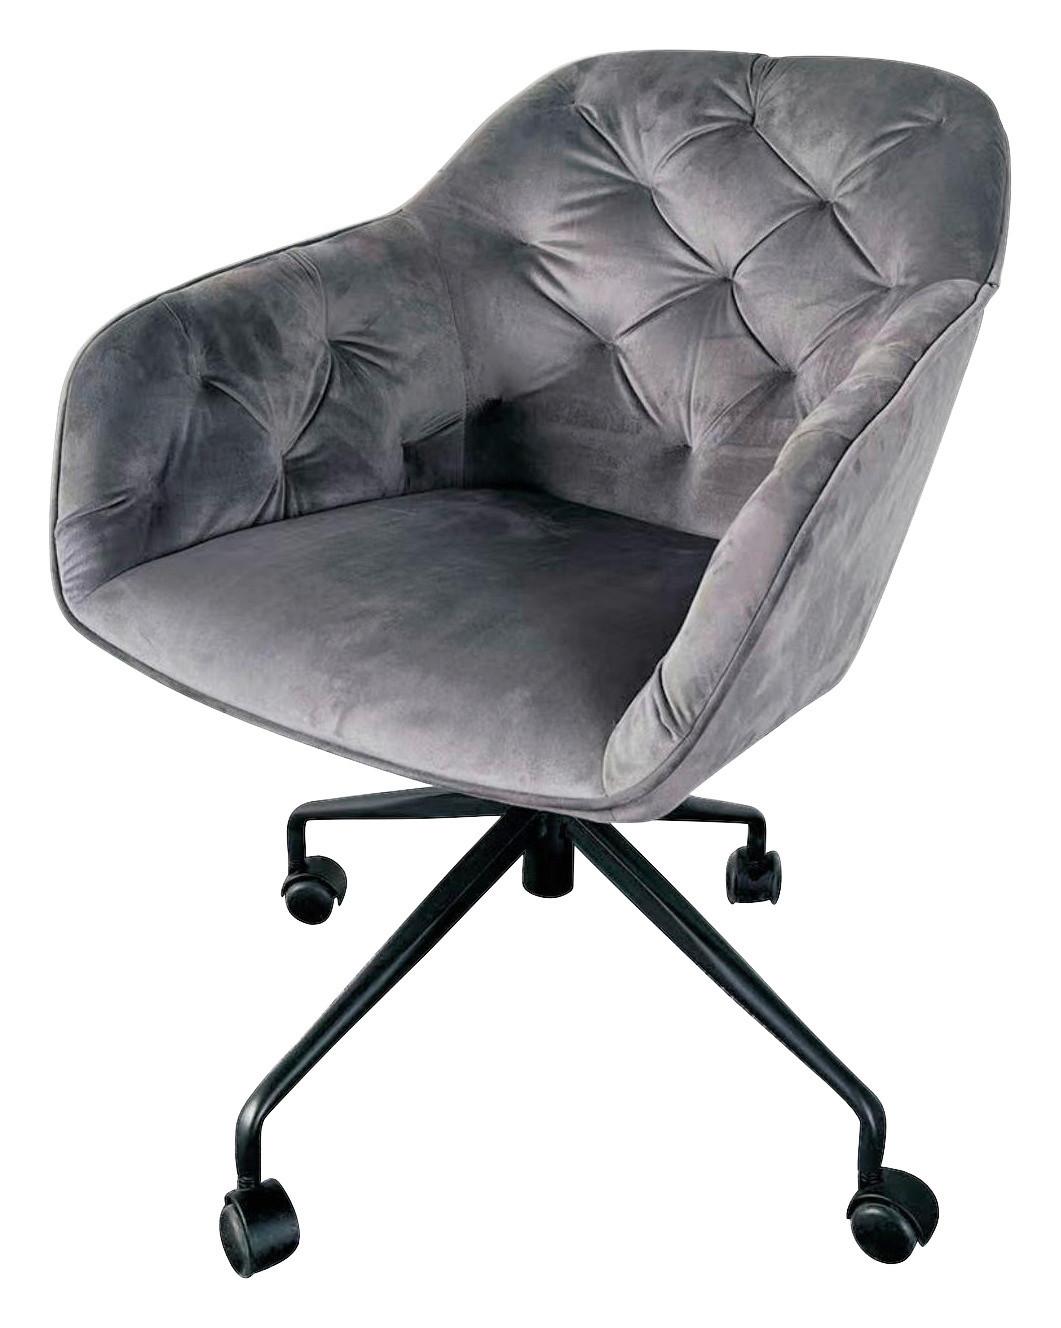 Kancelárska Stolička Elly -Exklusiv- - čierna/sivá, Design, kov/drevo (61/81-87/62cm) - Modern Living